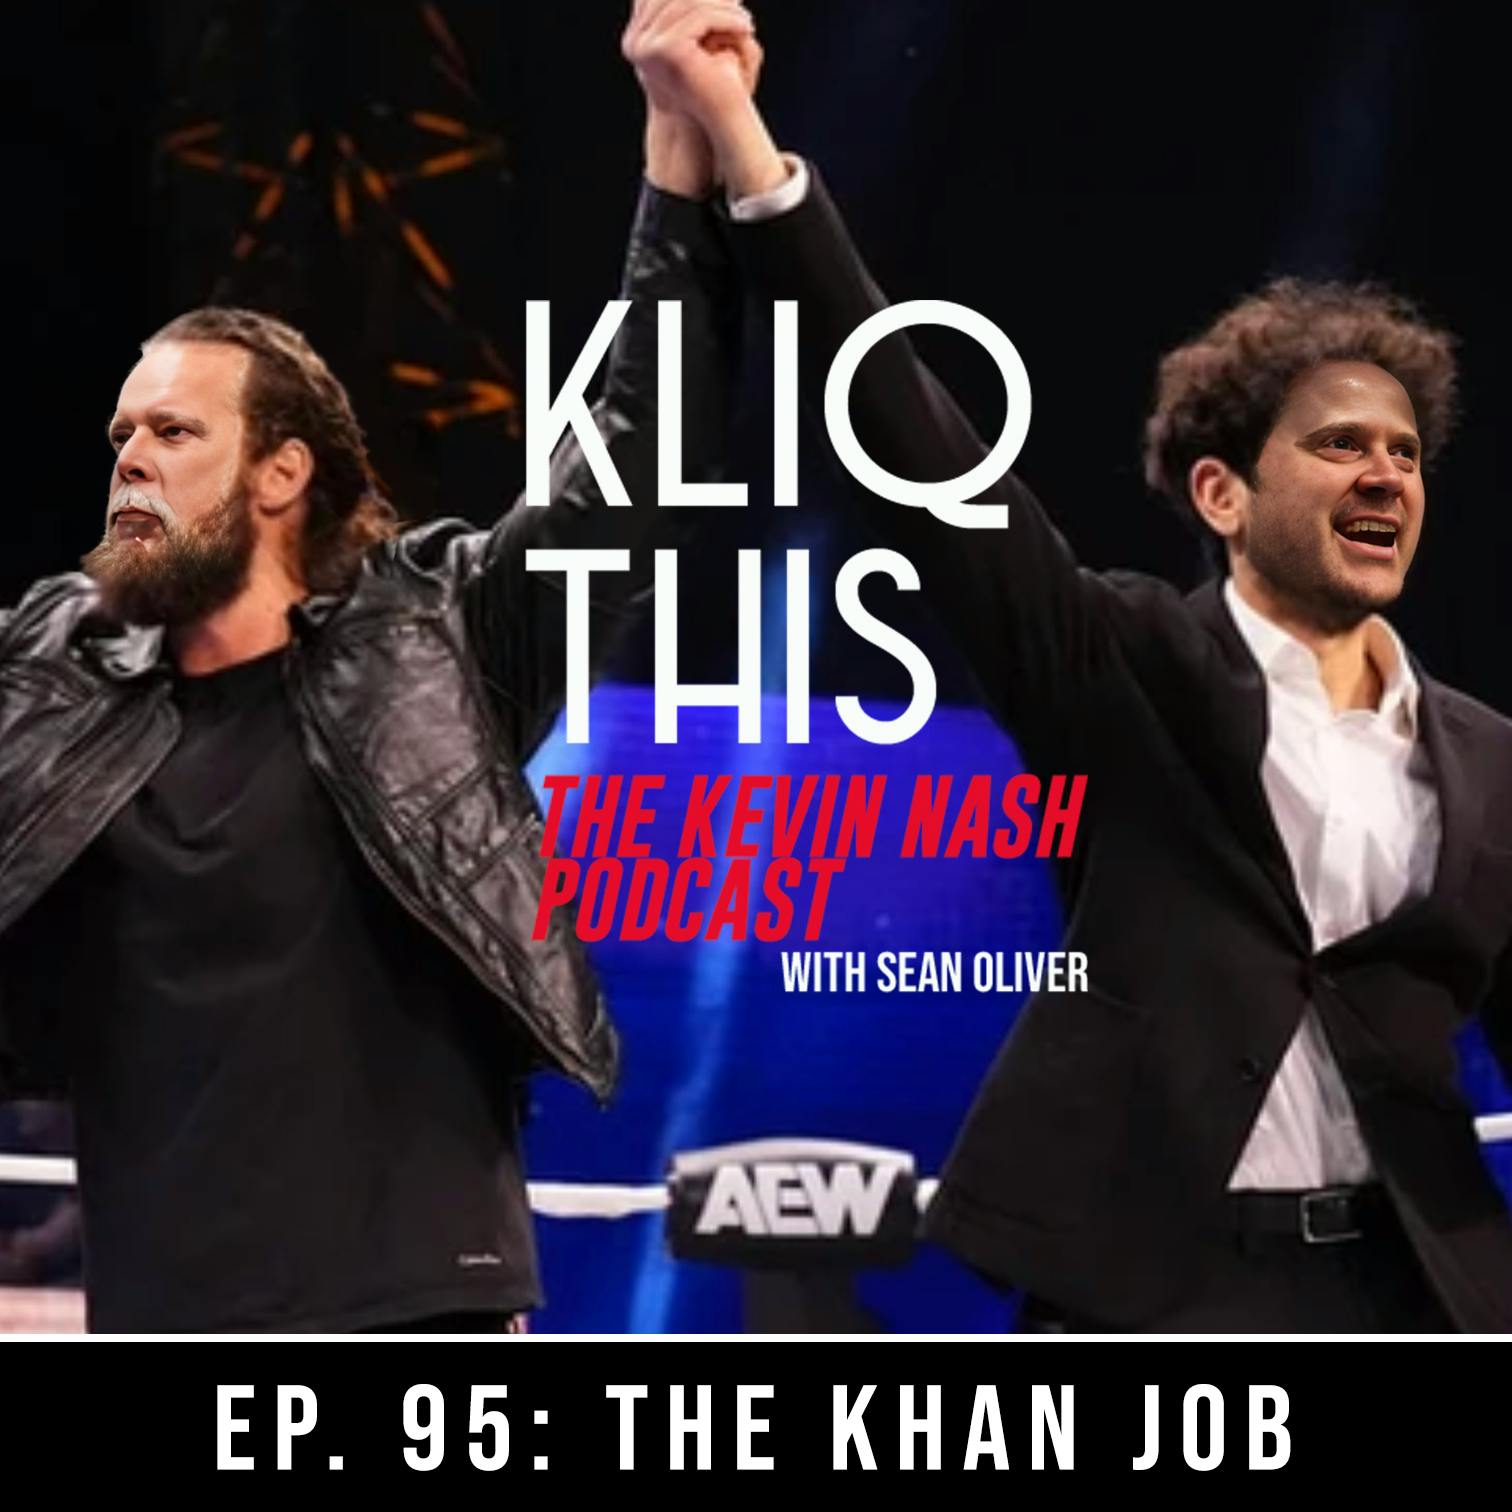 The Khan Job